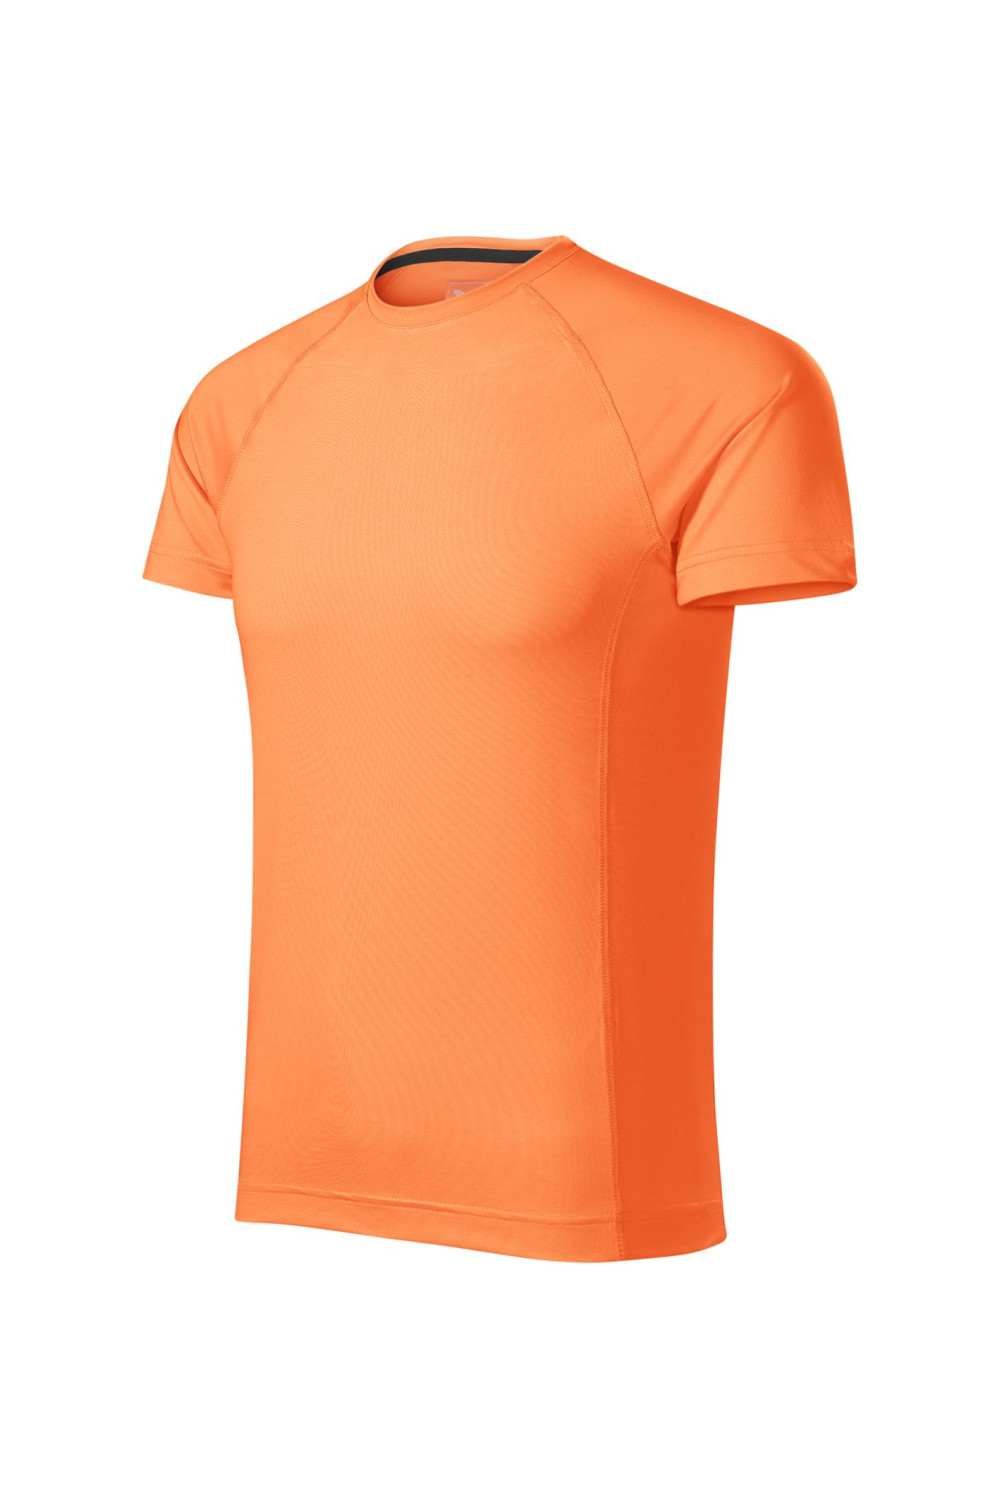 DESTINY 175 MALFINI ADLER Sportowa koszulka męska t-shirt neon mandarine